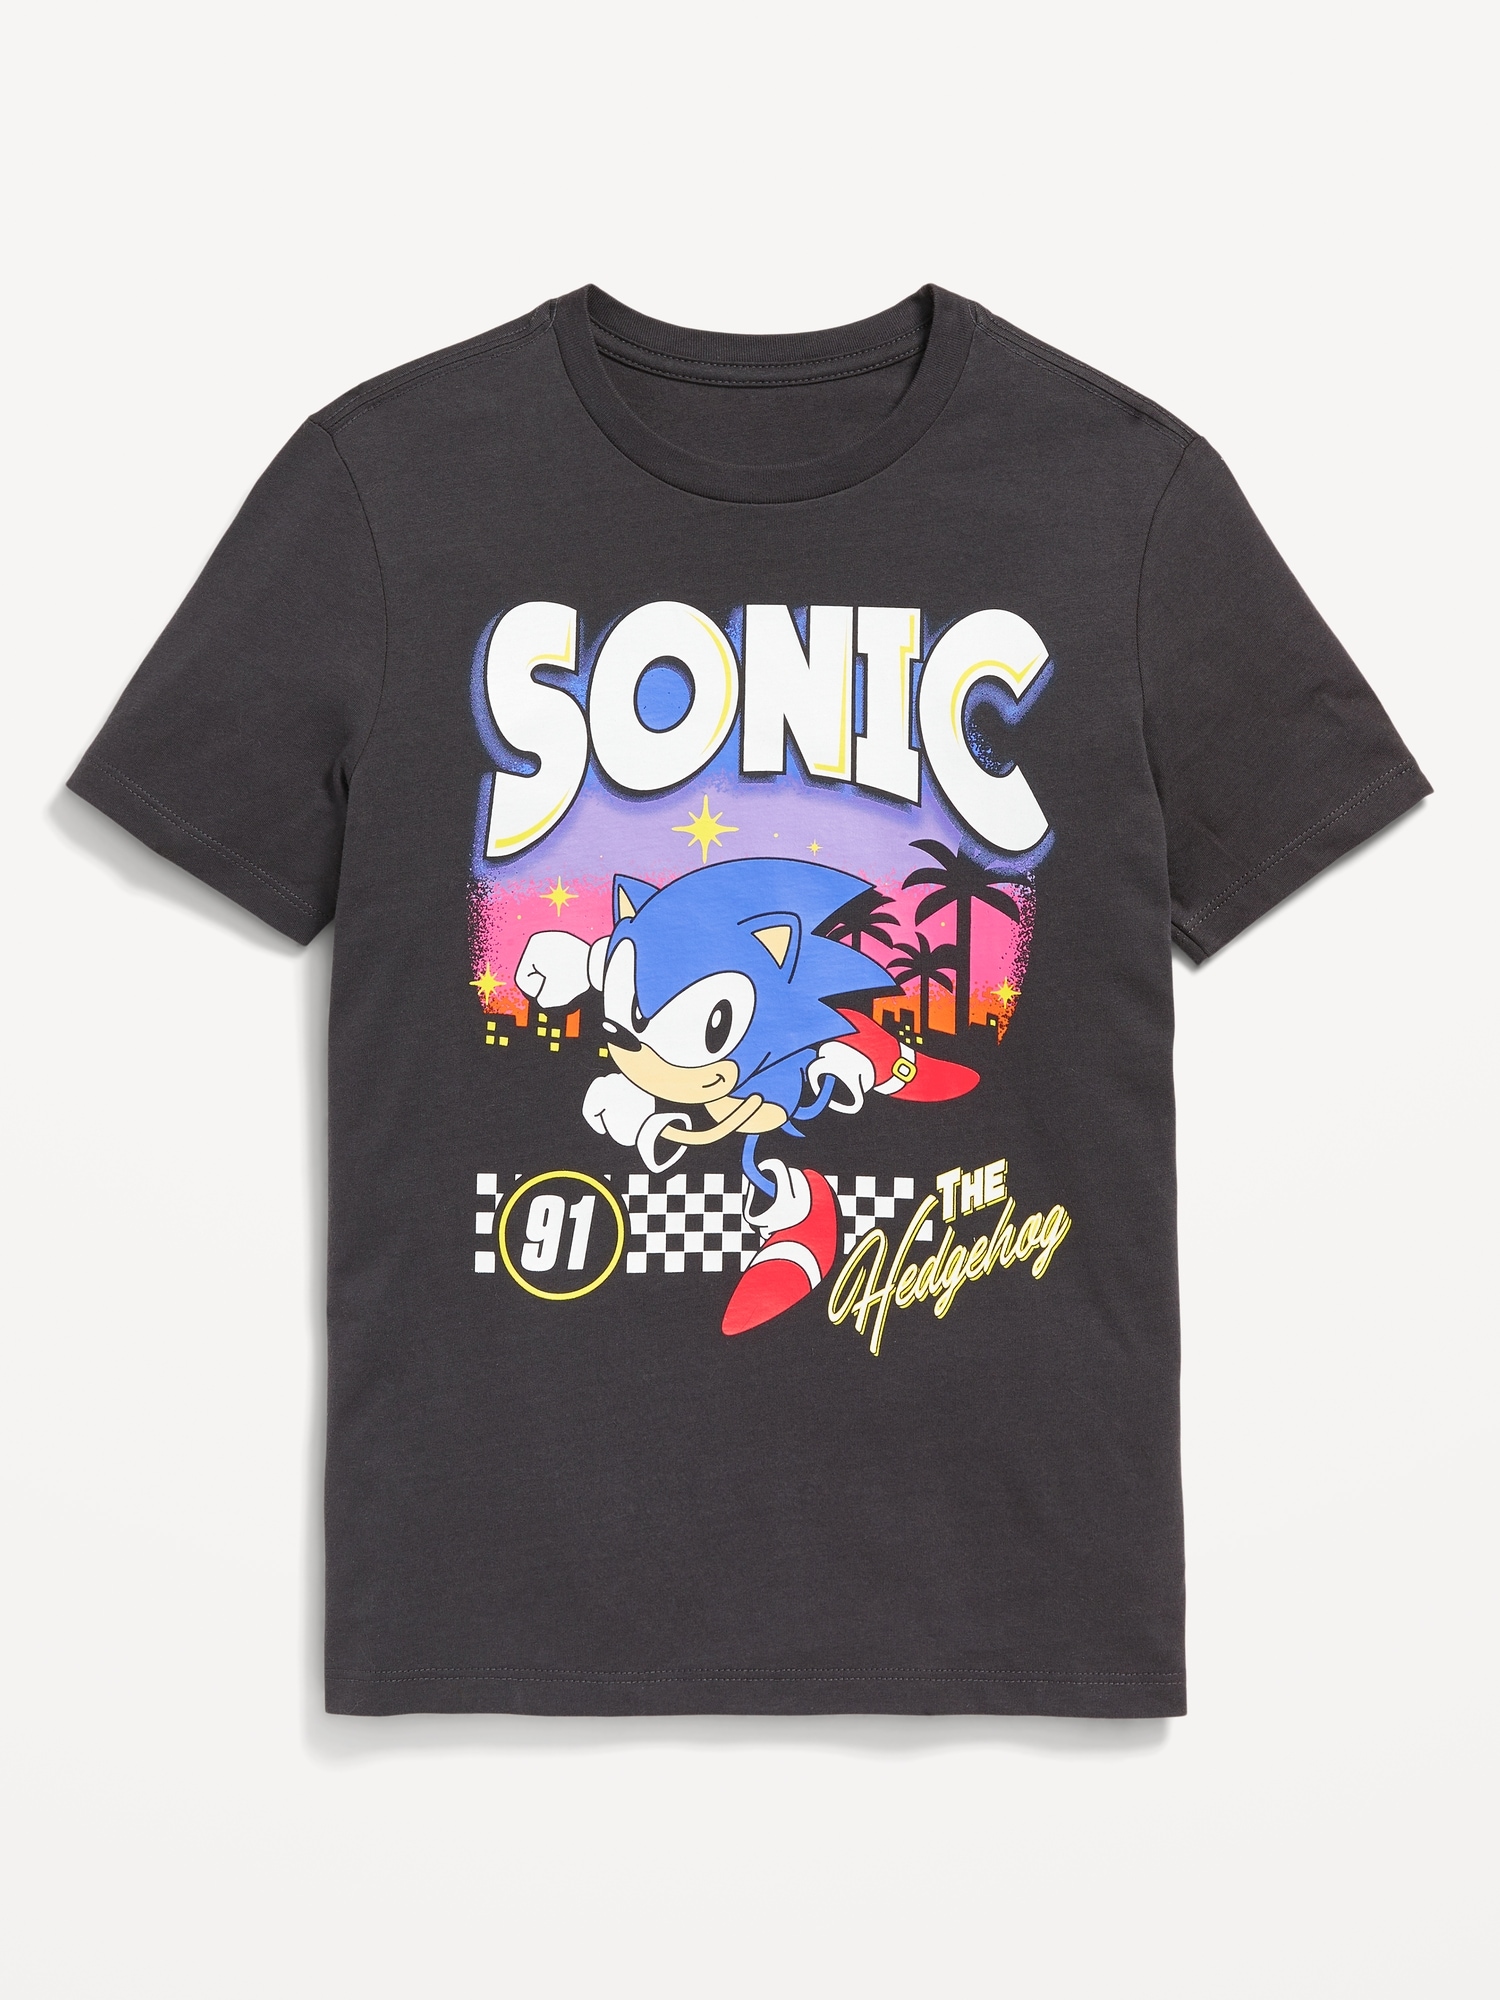 The Hedgehog Gender-Neutral Graphic T-Shirt for Kids